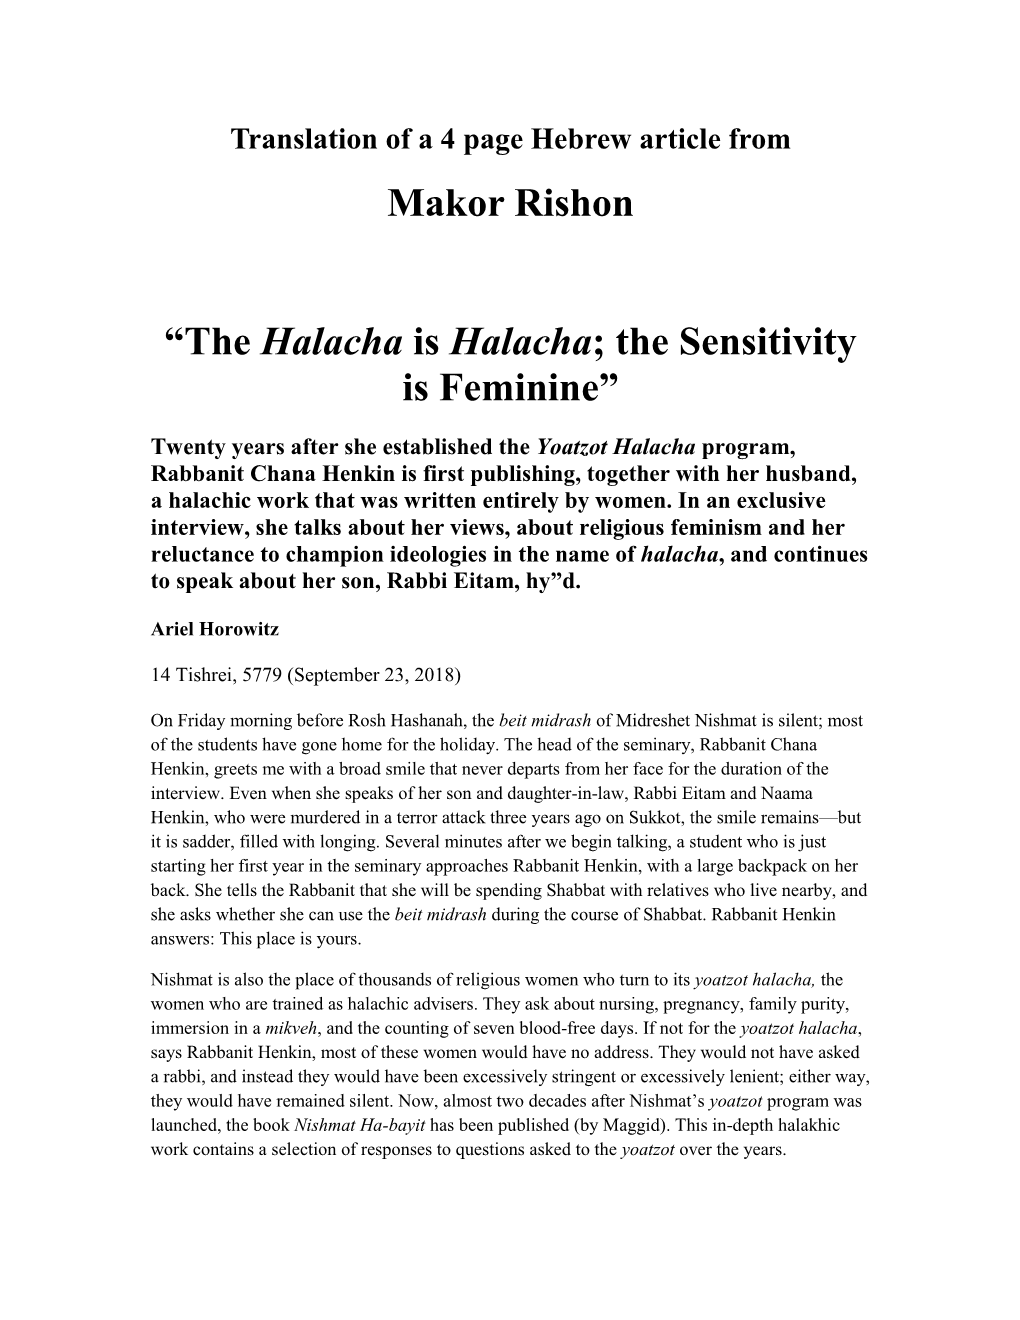 Makor Rishon “The Halacha Is Halacha; the Sensitivity Is Feminine”